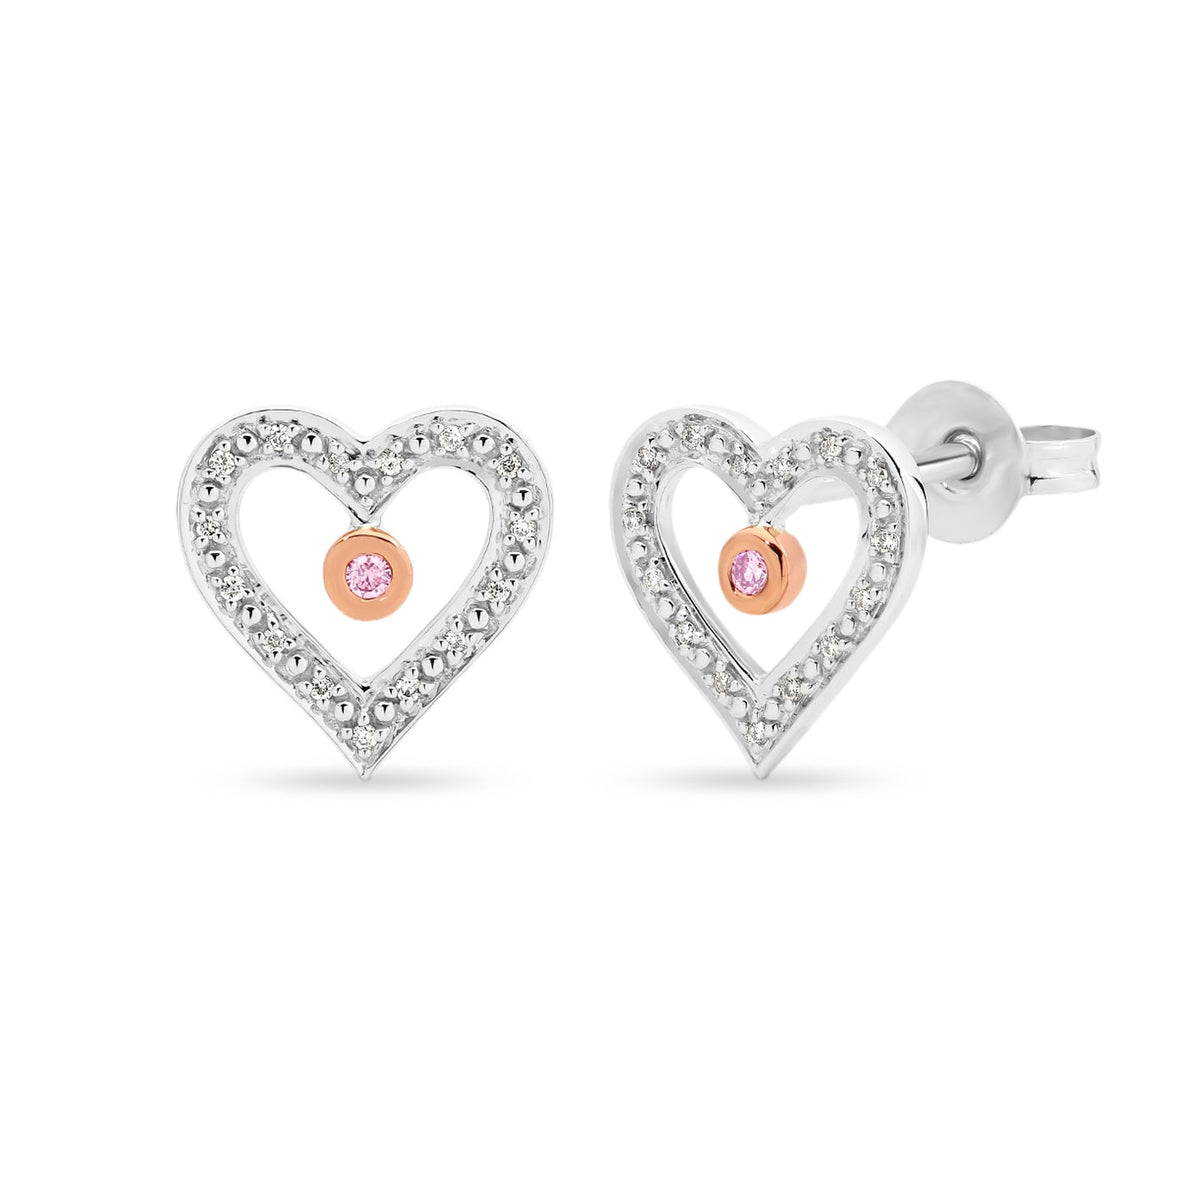 Pink Diamond Jewellery - Markbridge Jewellers